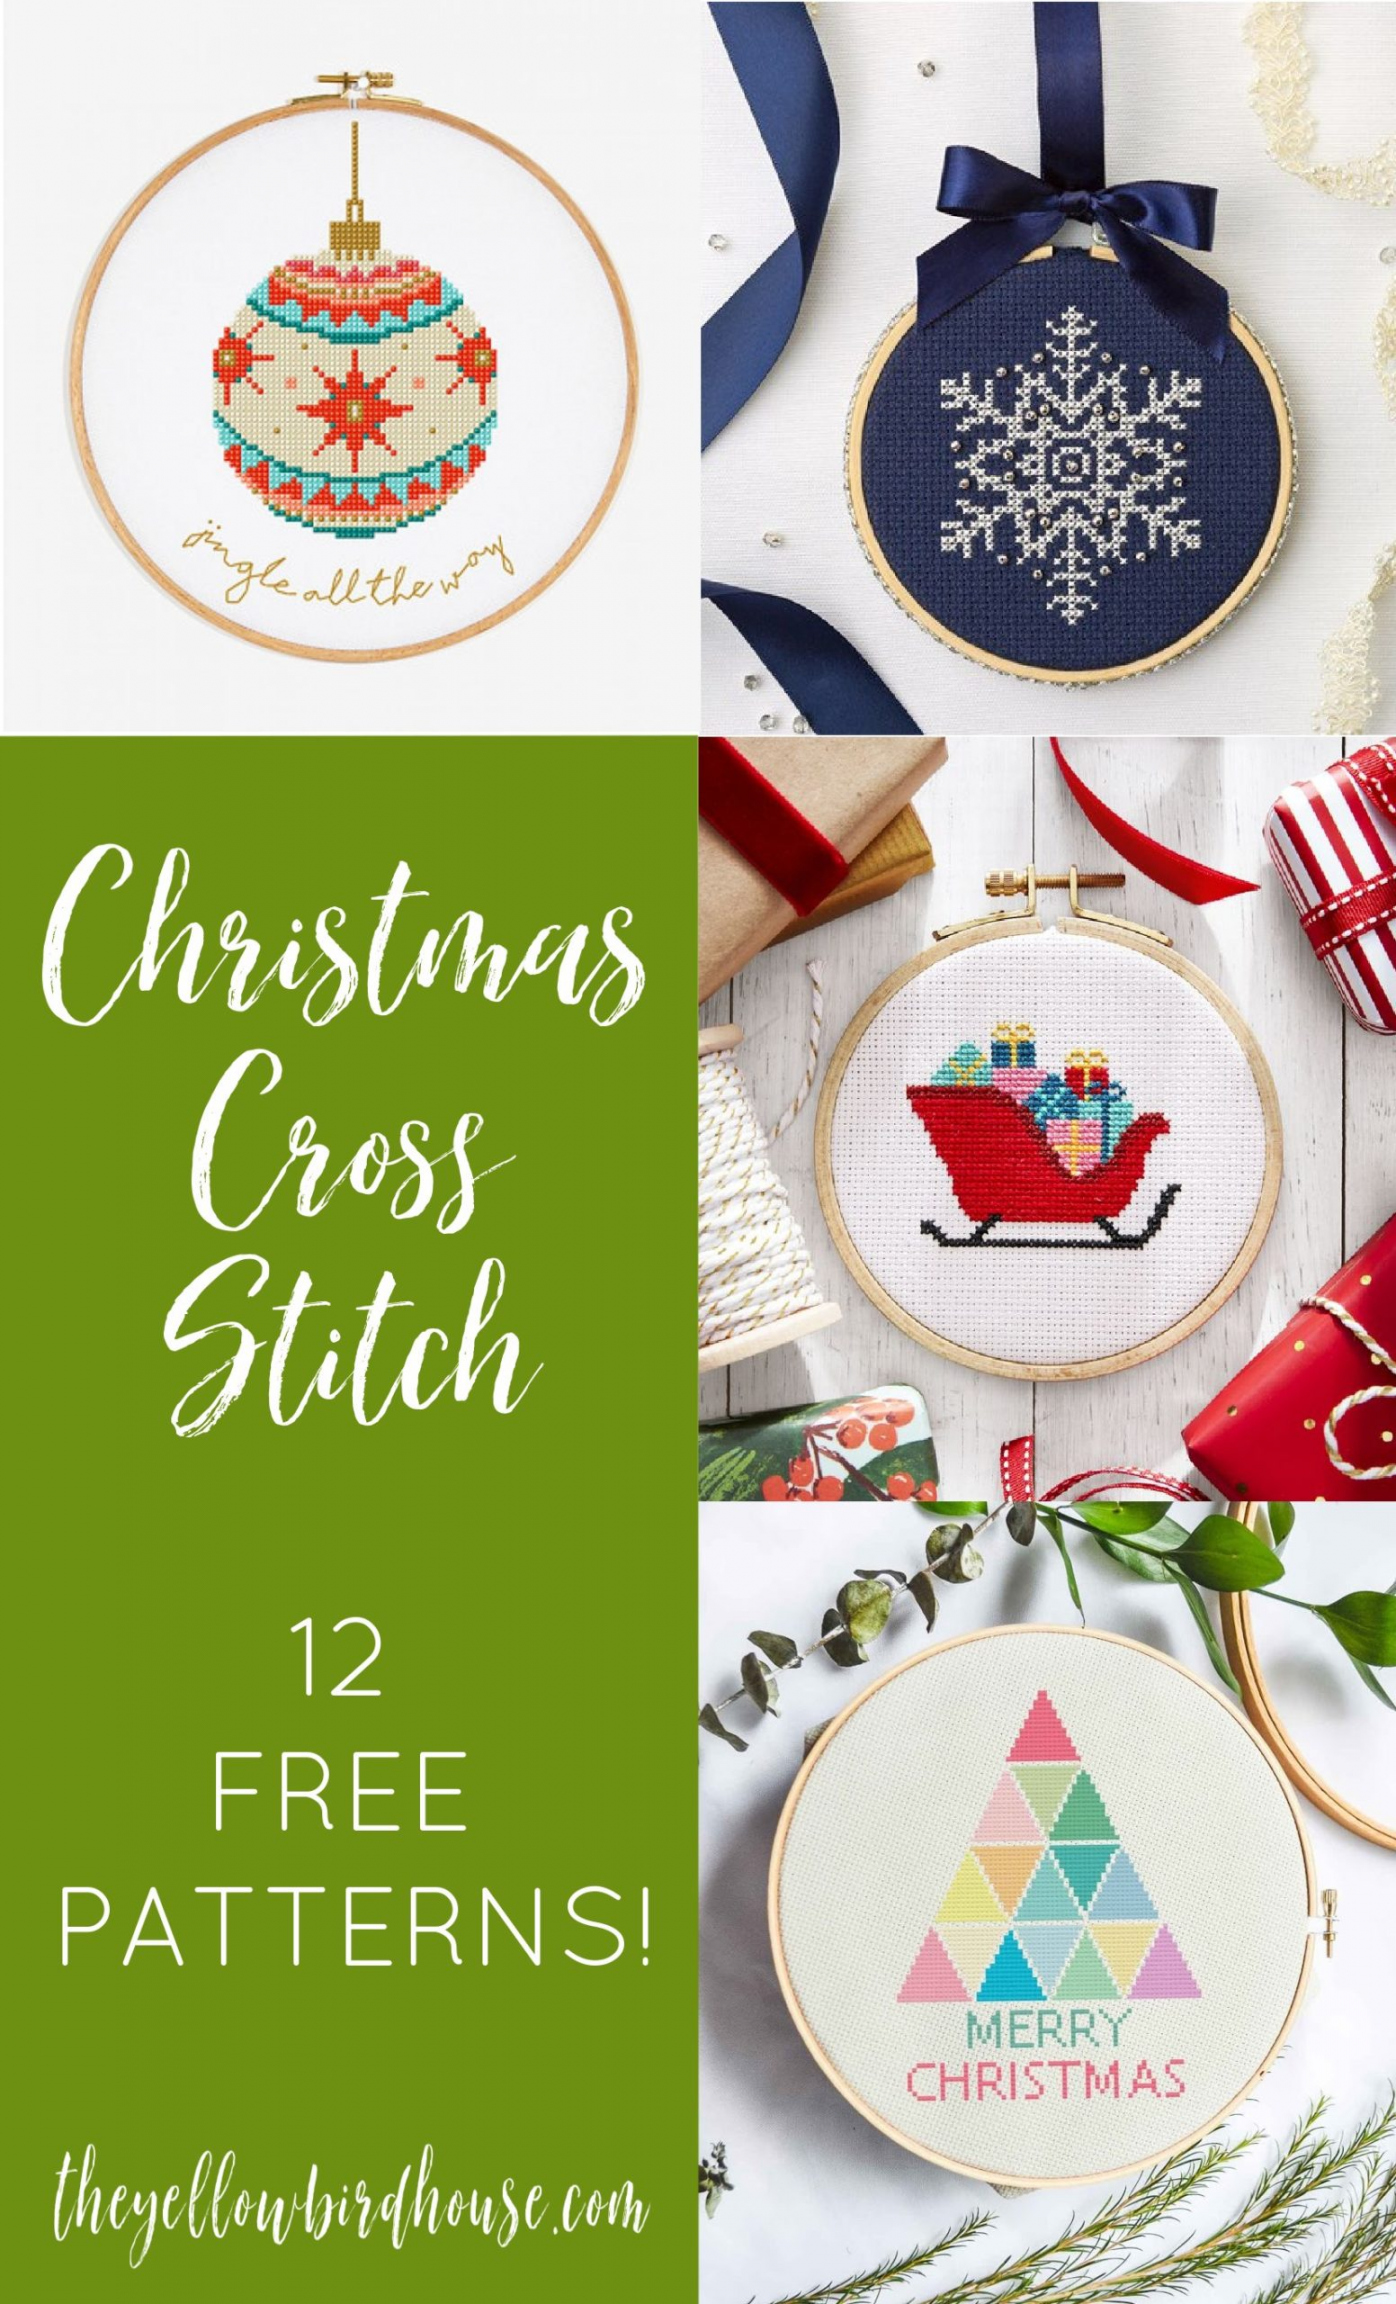 Free Christmas Cross Stitch Patterns - The Yellow Birdhouse - FREE Printables - Printable Free Christmas Cross Stitch Patterns For Cards